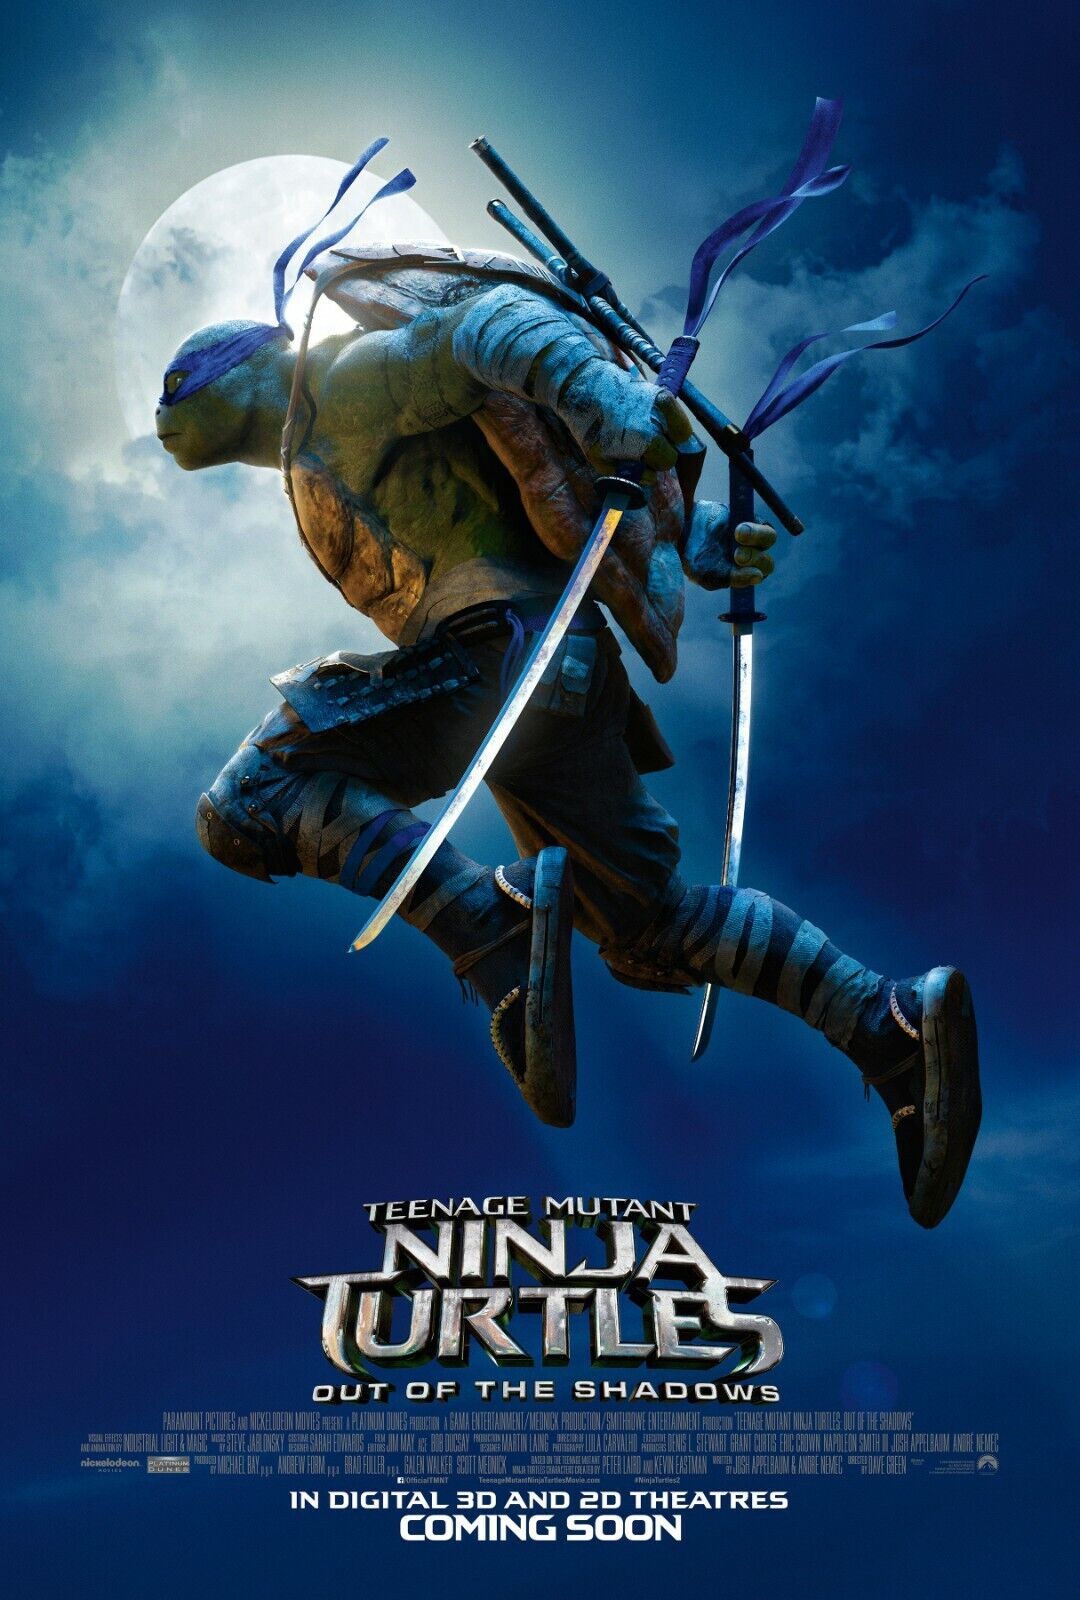 Teenage Mutant Ninja Turtles movie poster - 11 x 17 - Out Of The Shadows  (c) | eBay